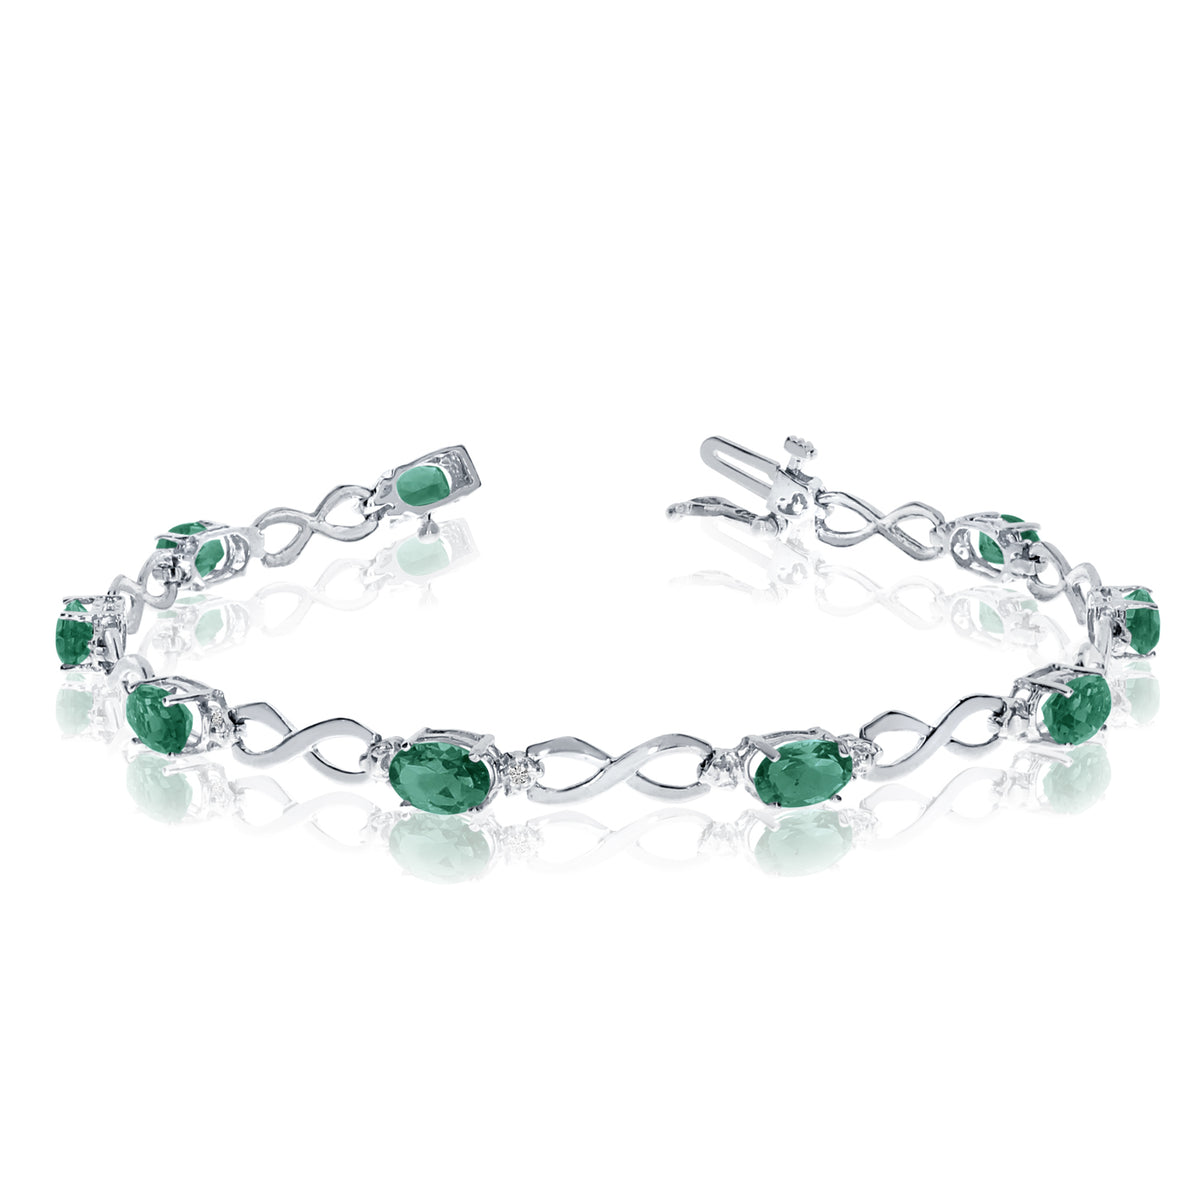 14K White Gold Oval Emerald Stones And Diamonds Infinity Tennis Bracelet, 7" fine designer jewelry for men and women